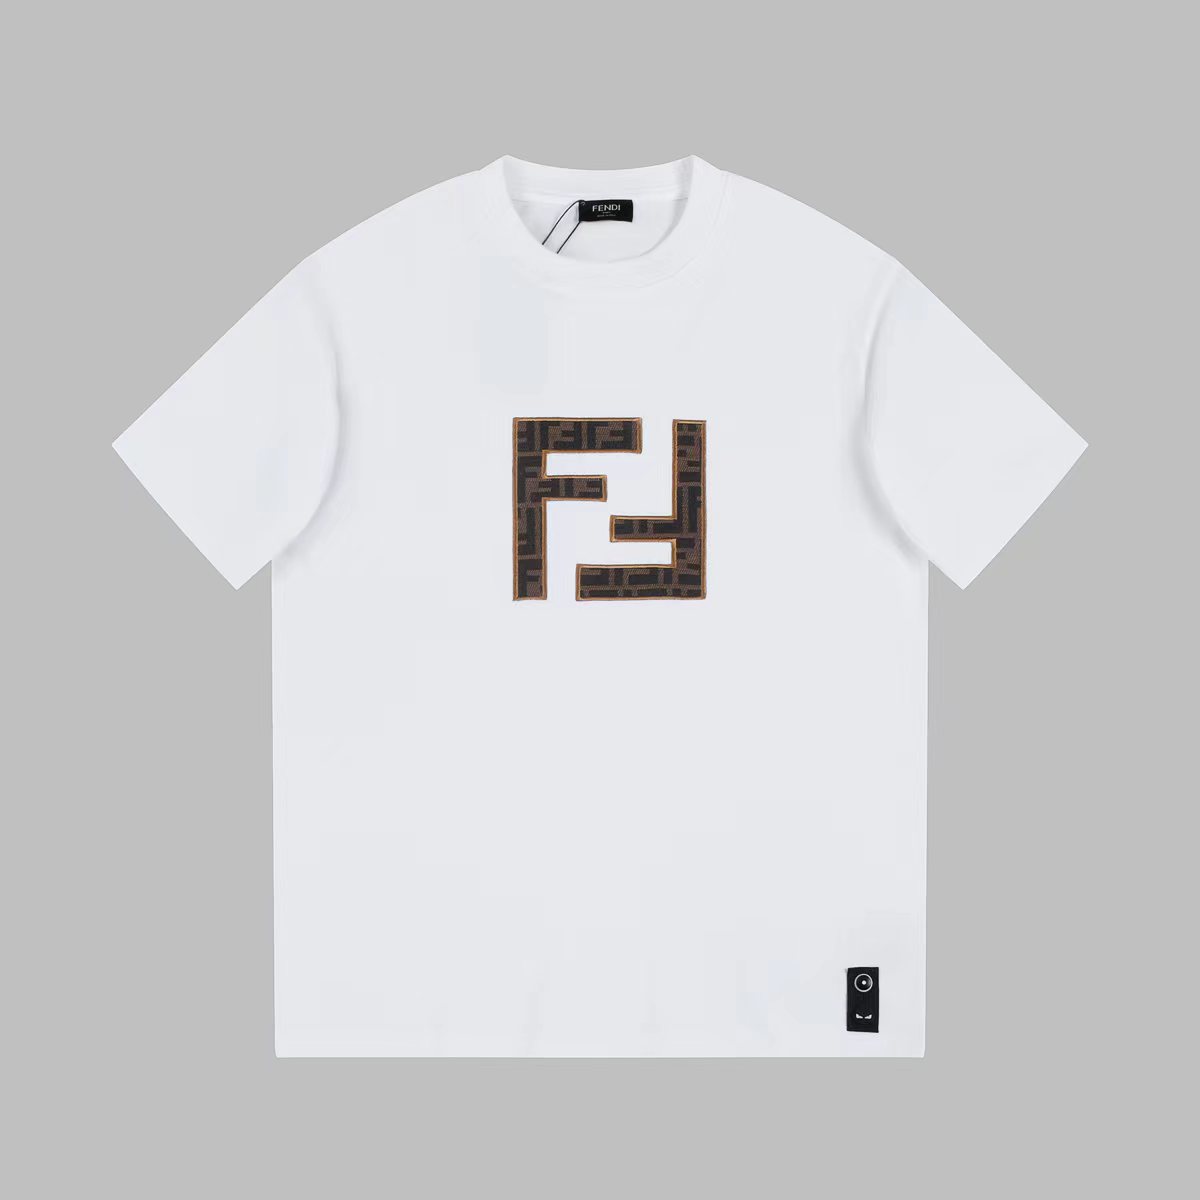 Fendi Clothing T-Shirt Black White Fashion